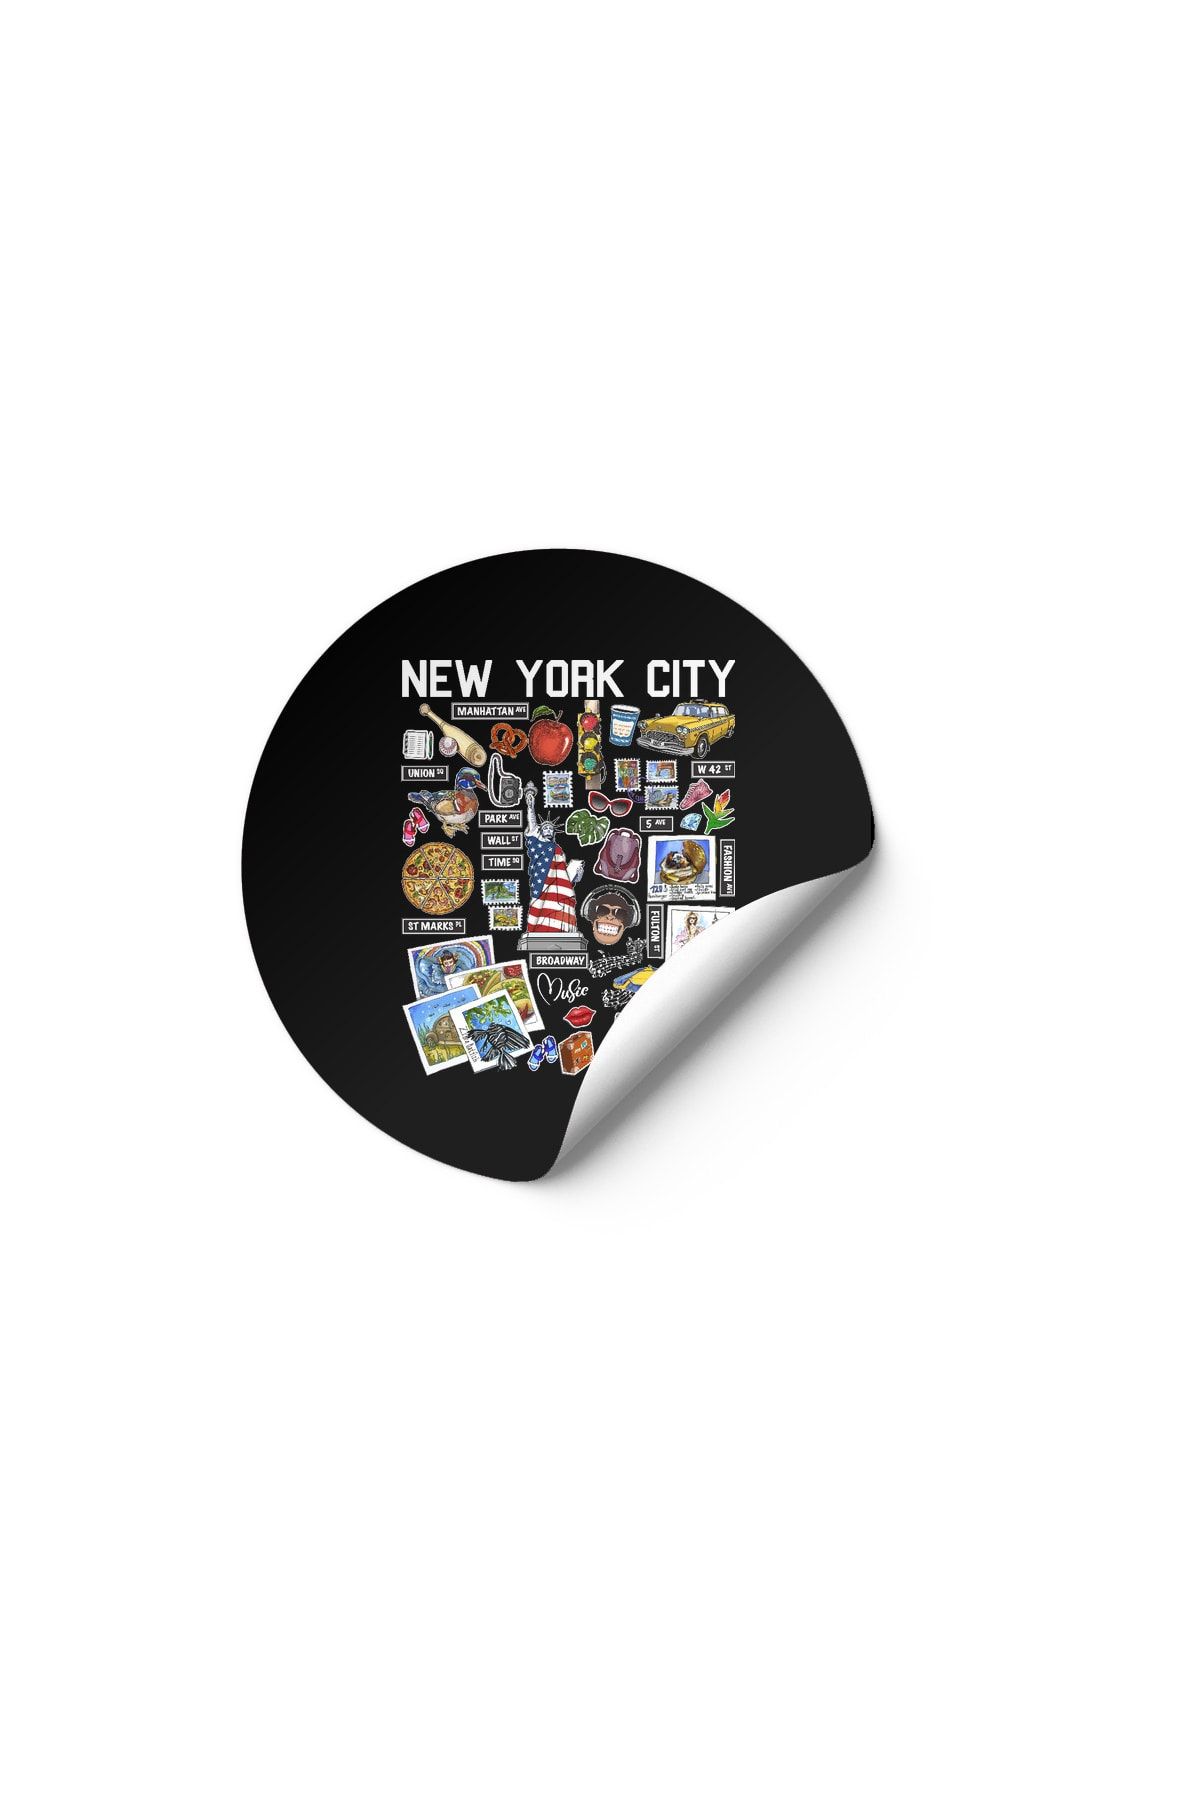 Fizello Nyc New York City Travel Graphic Tee Shirt Sticker